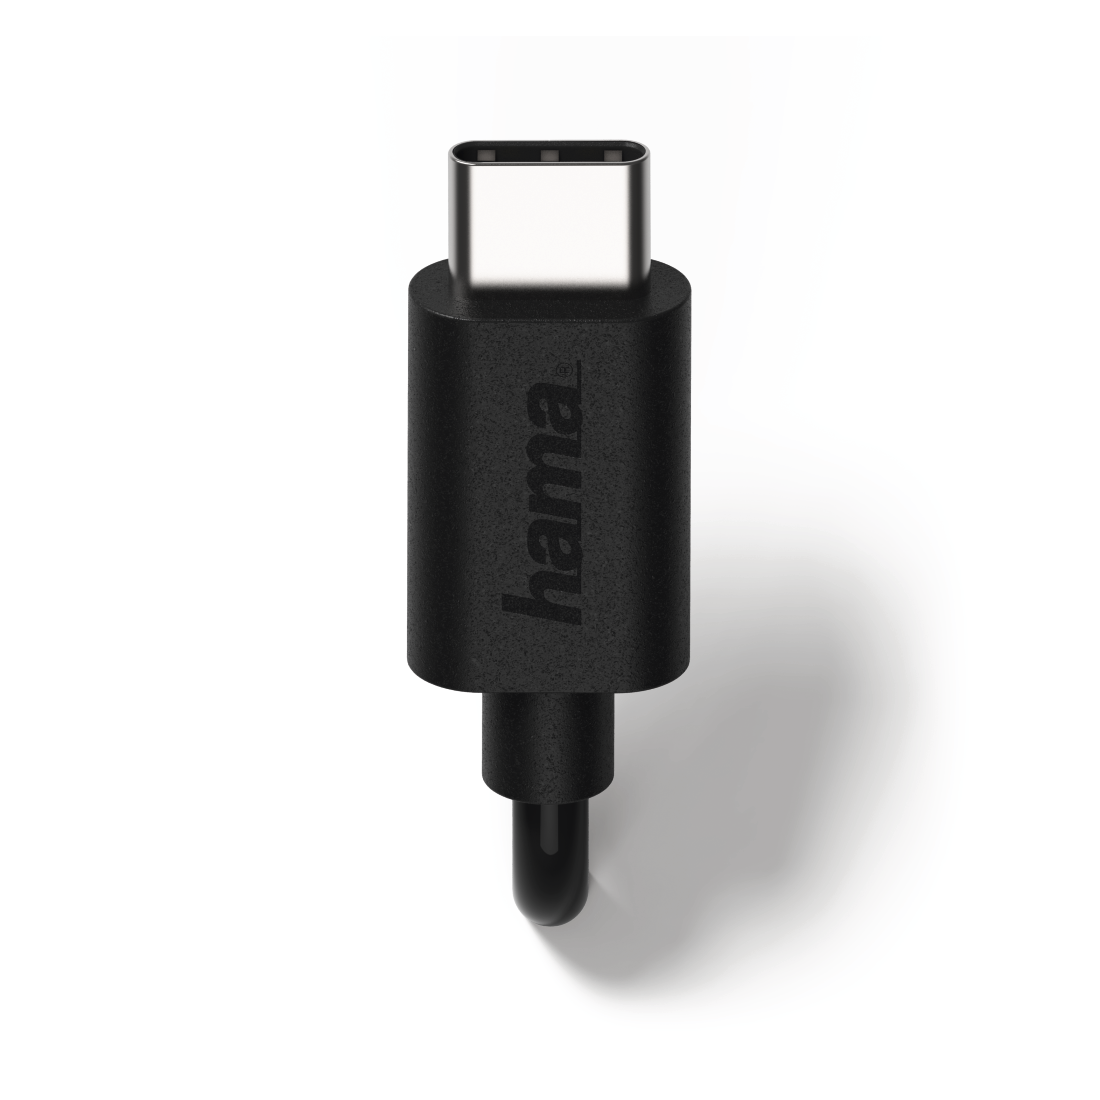 00178277 Hama Charger, USB Type-C, 3 black |